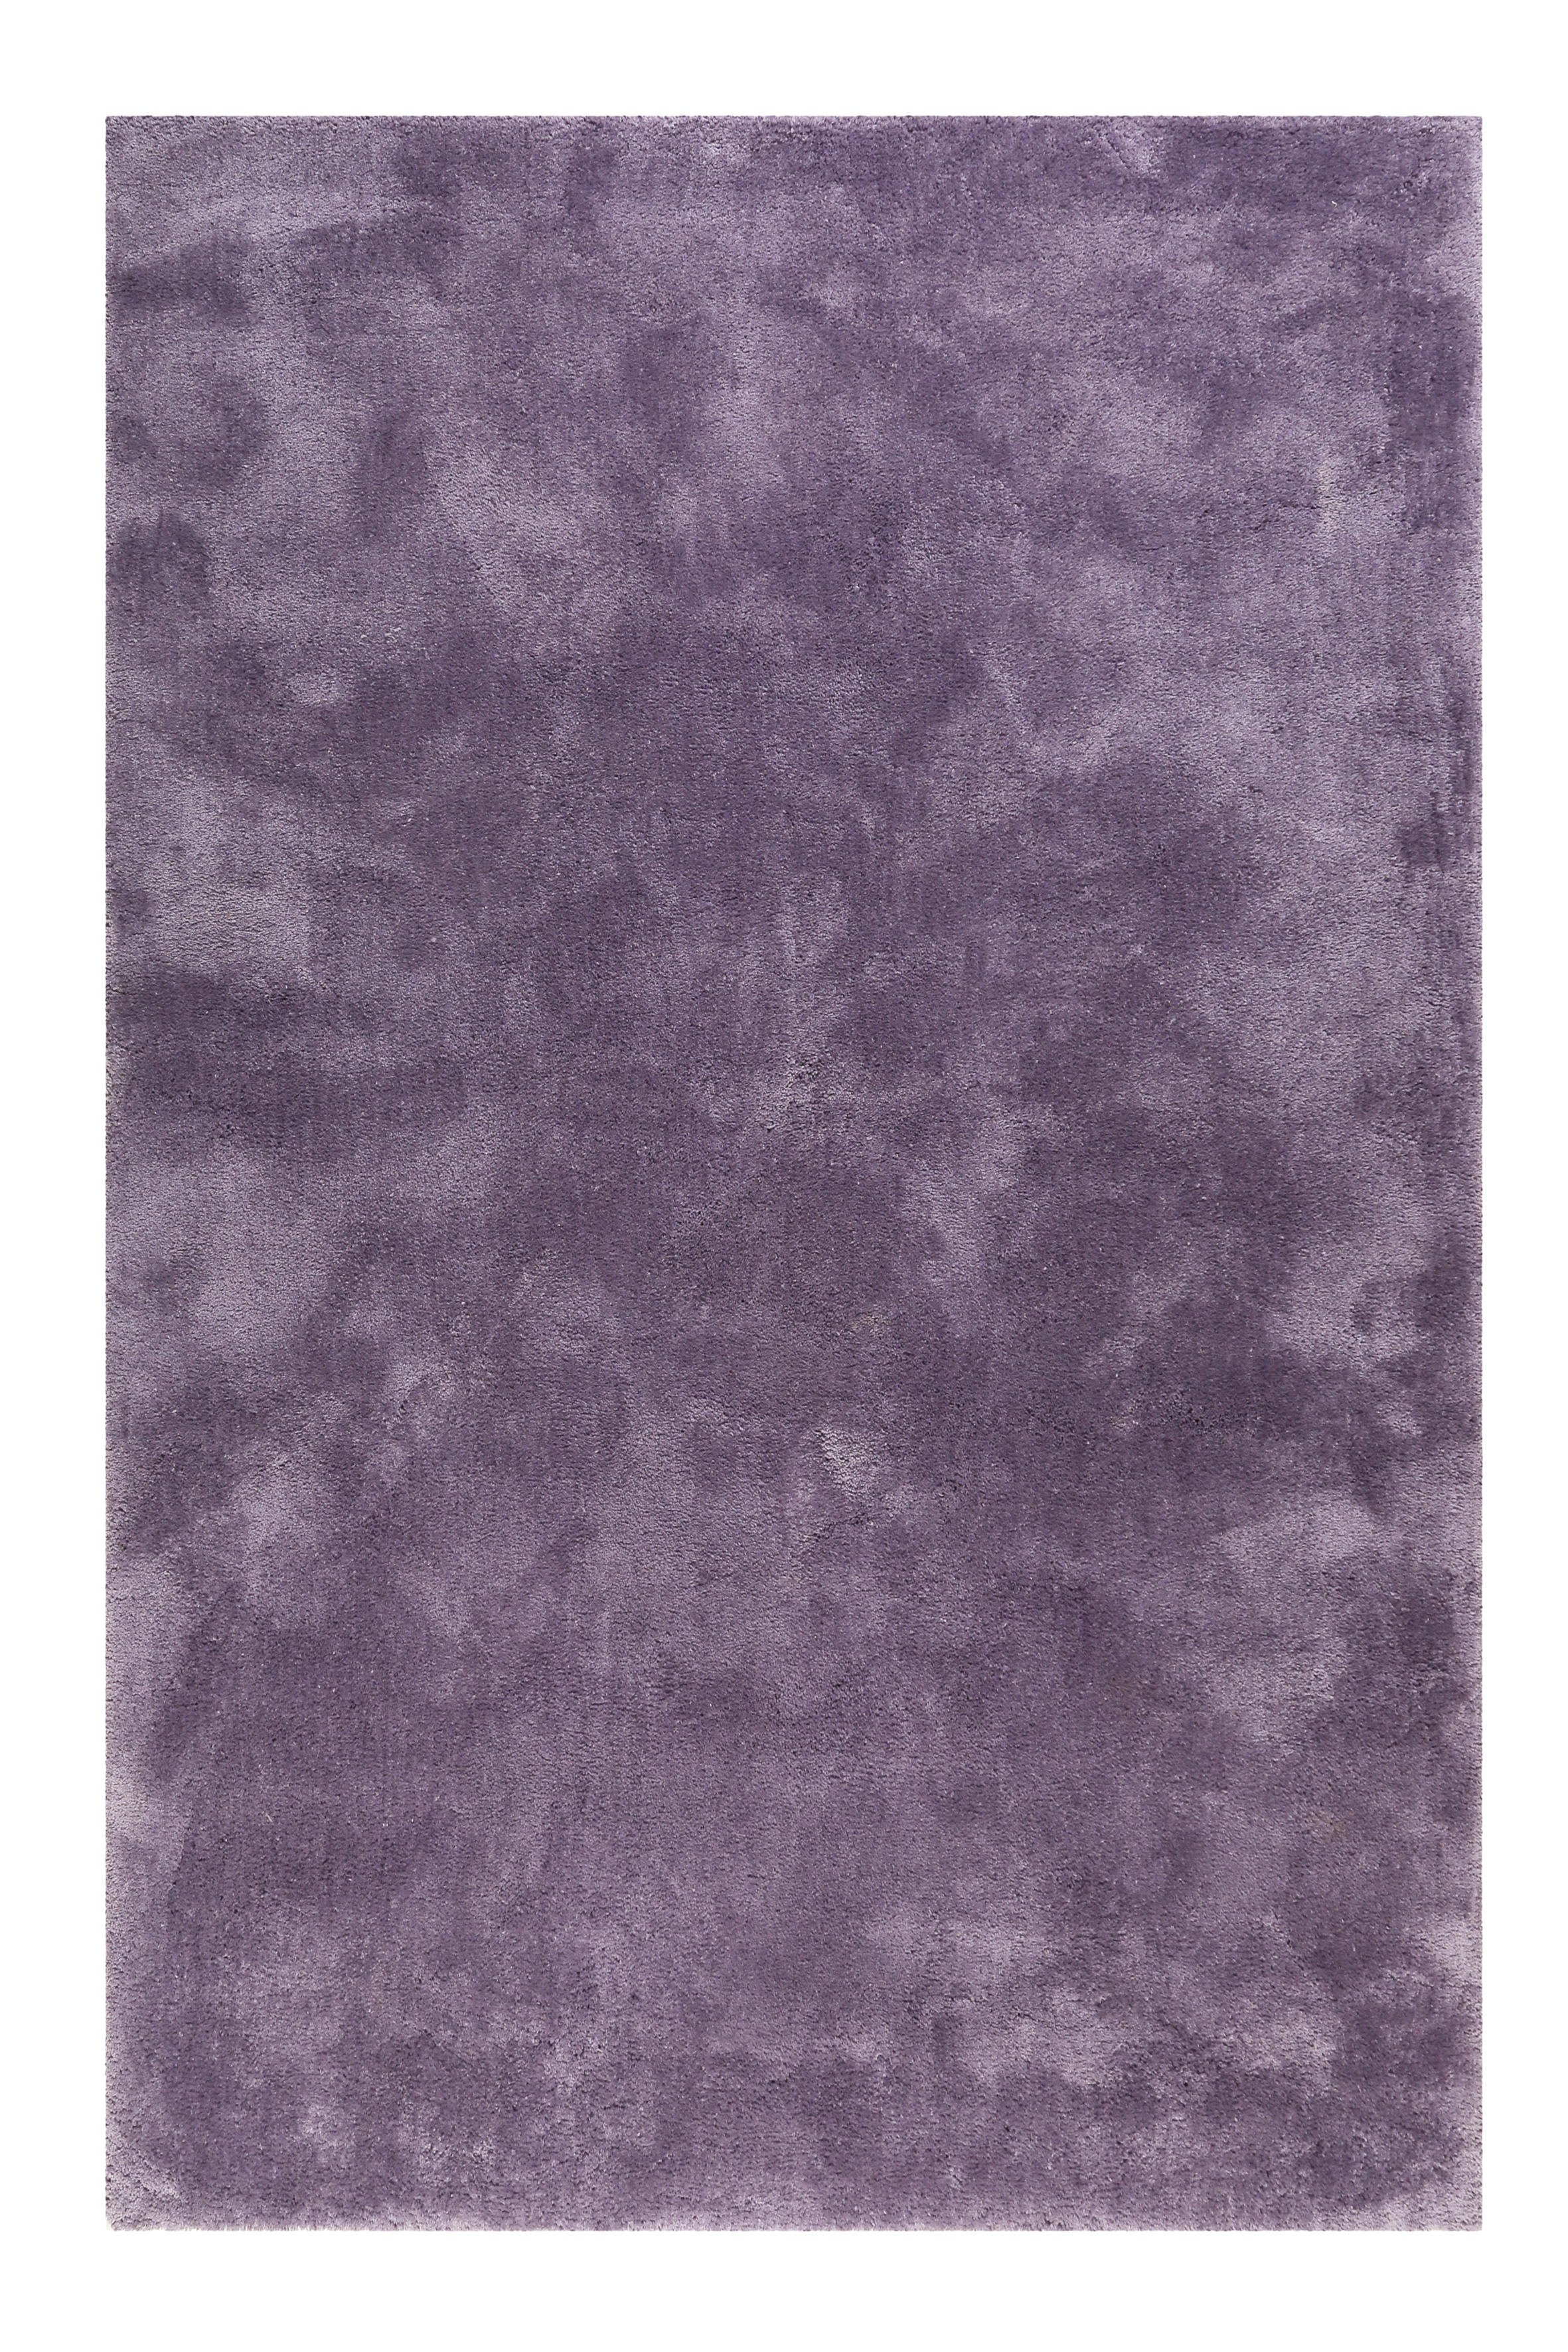 HOCHFLORTEPPICH  120/170 cm  getuftet  Lila   - Lila, Basics, Textil (120/170cm) - Esprit